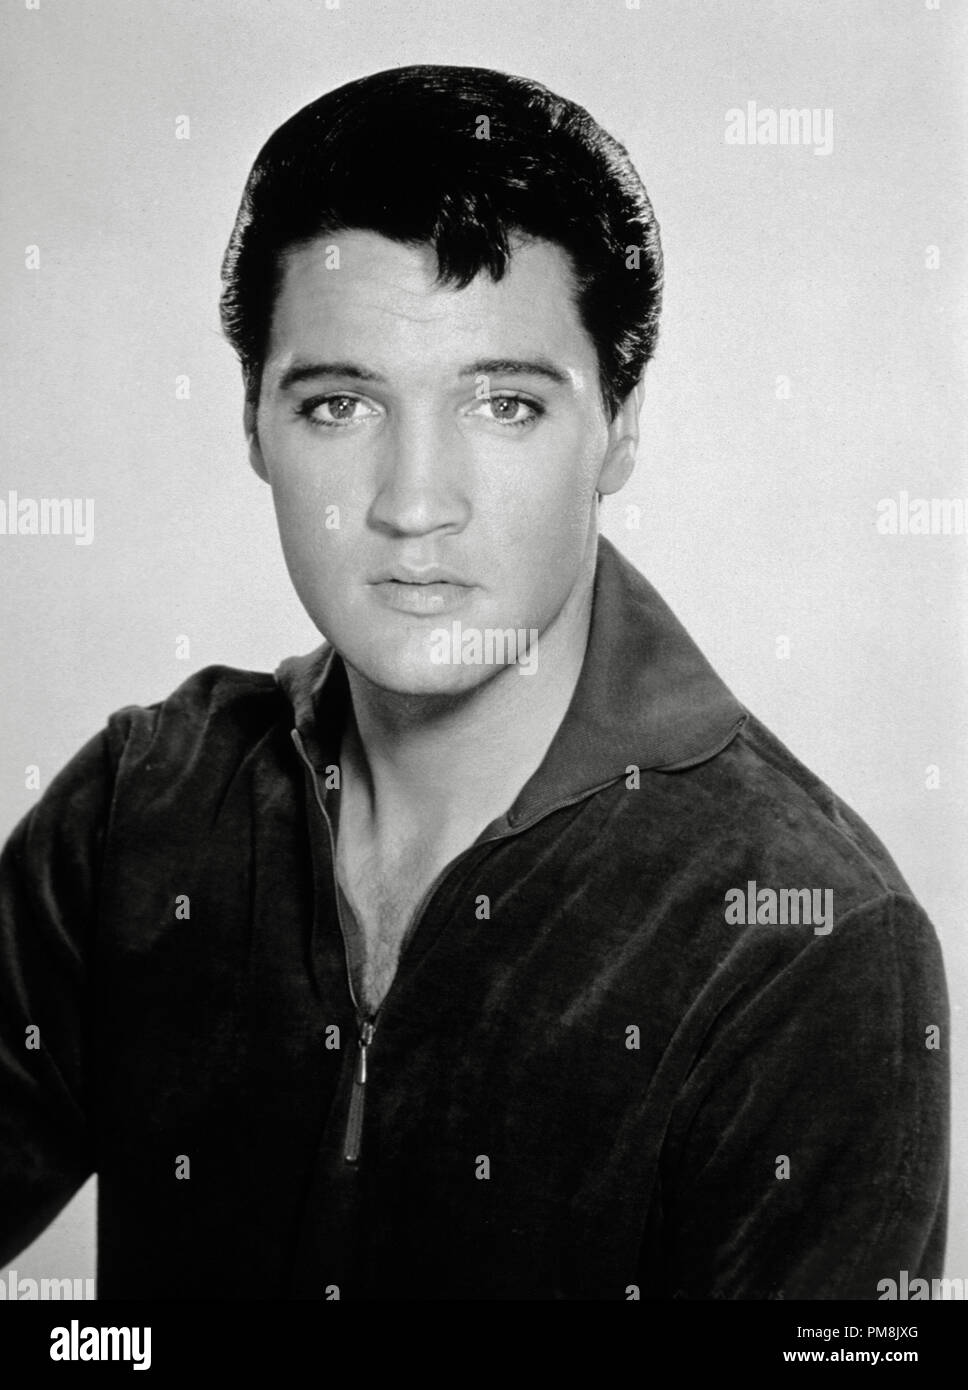 (Archivierung klassische Kino - Elvis Presley Retrospektive) Elvis Presley, circa 1966. Datei Referenz # 31616 053 THA Stockfoto